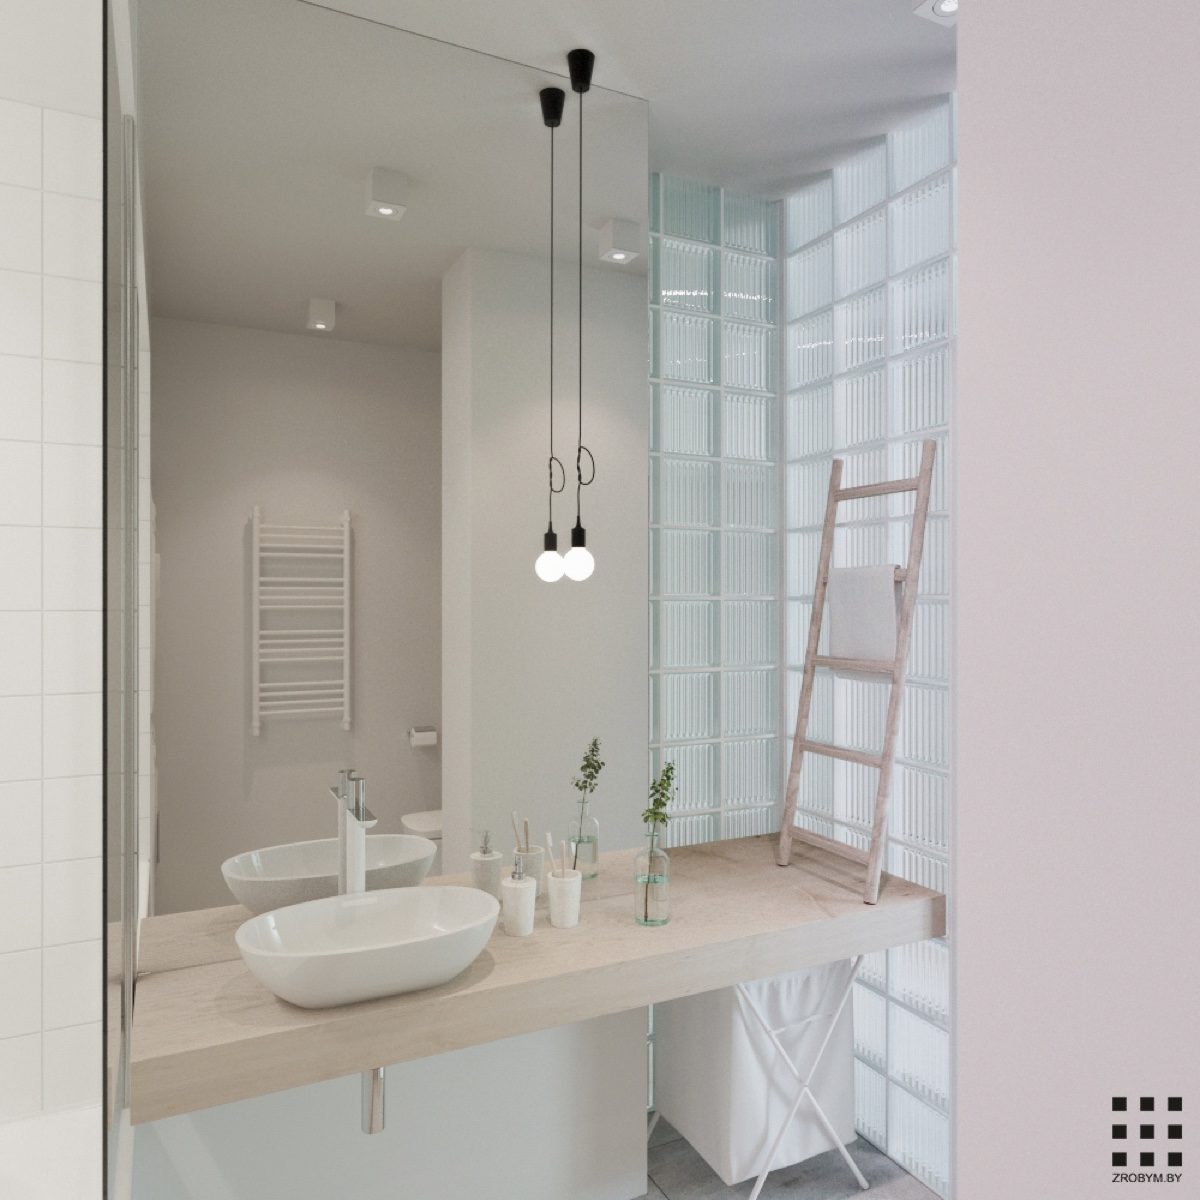 ladder-railings-hanging-light-modern-bathroom-5405383